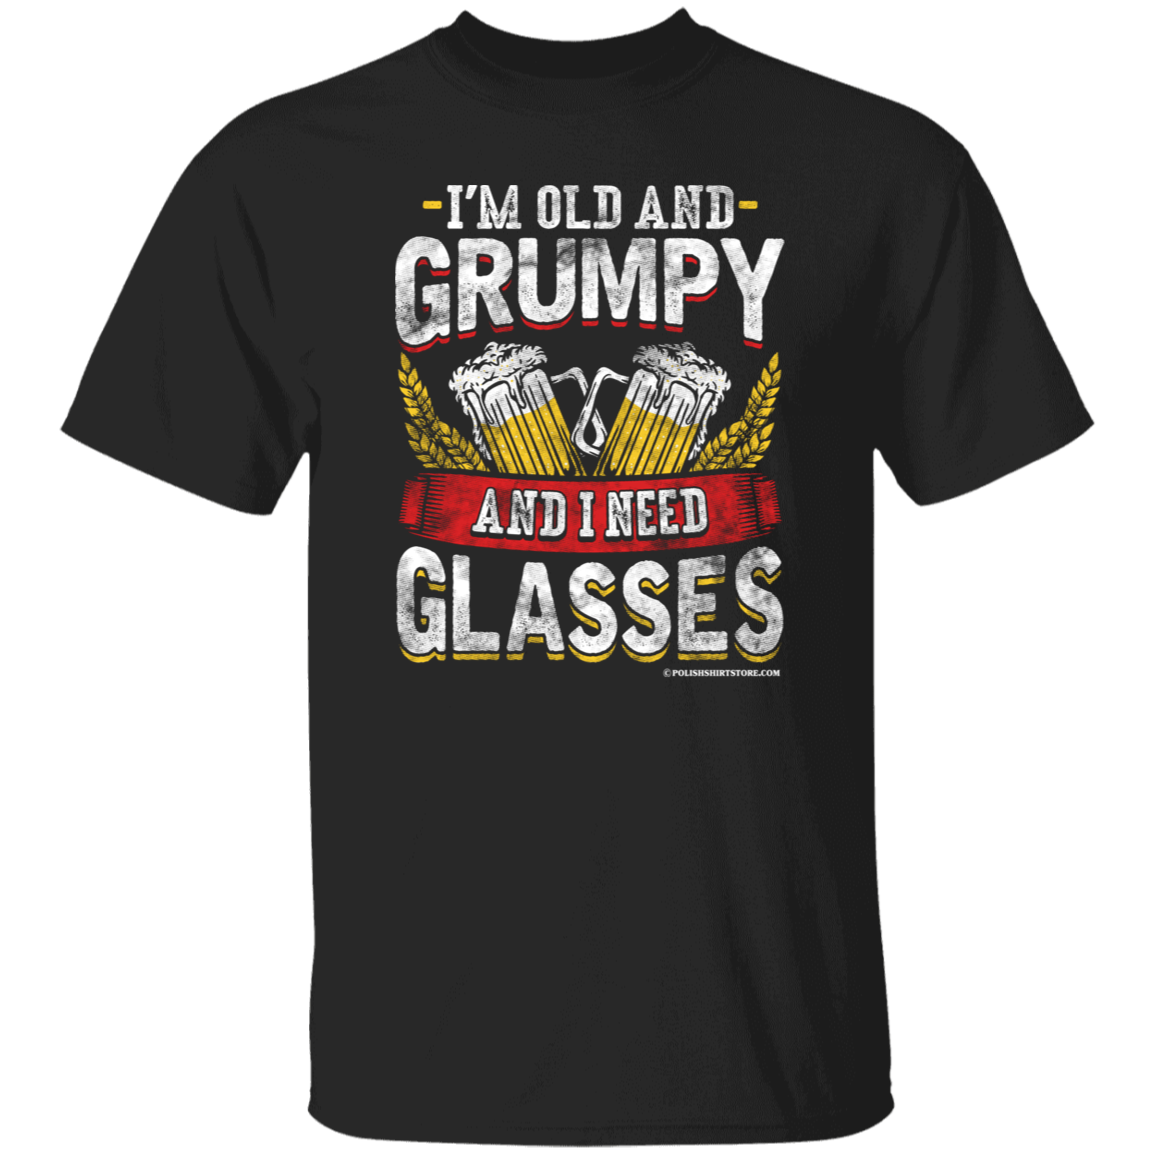 I'm Old and Grumpy And I Need Glasses Apparel CustomCat G500 5.3 oz. T-Shirt Black S